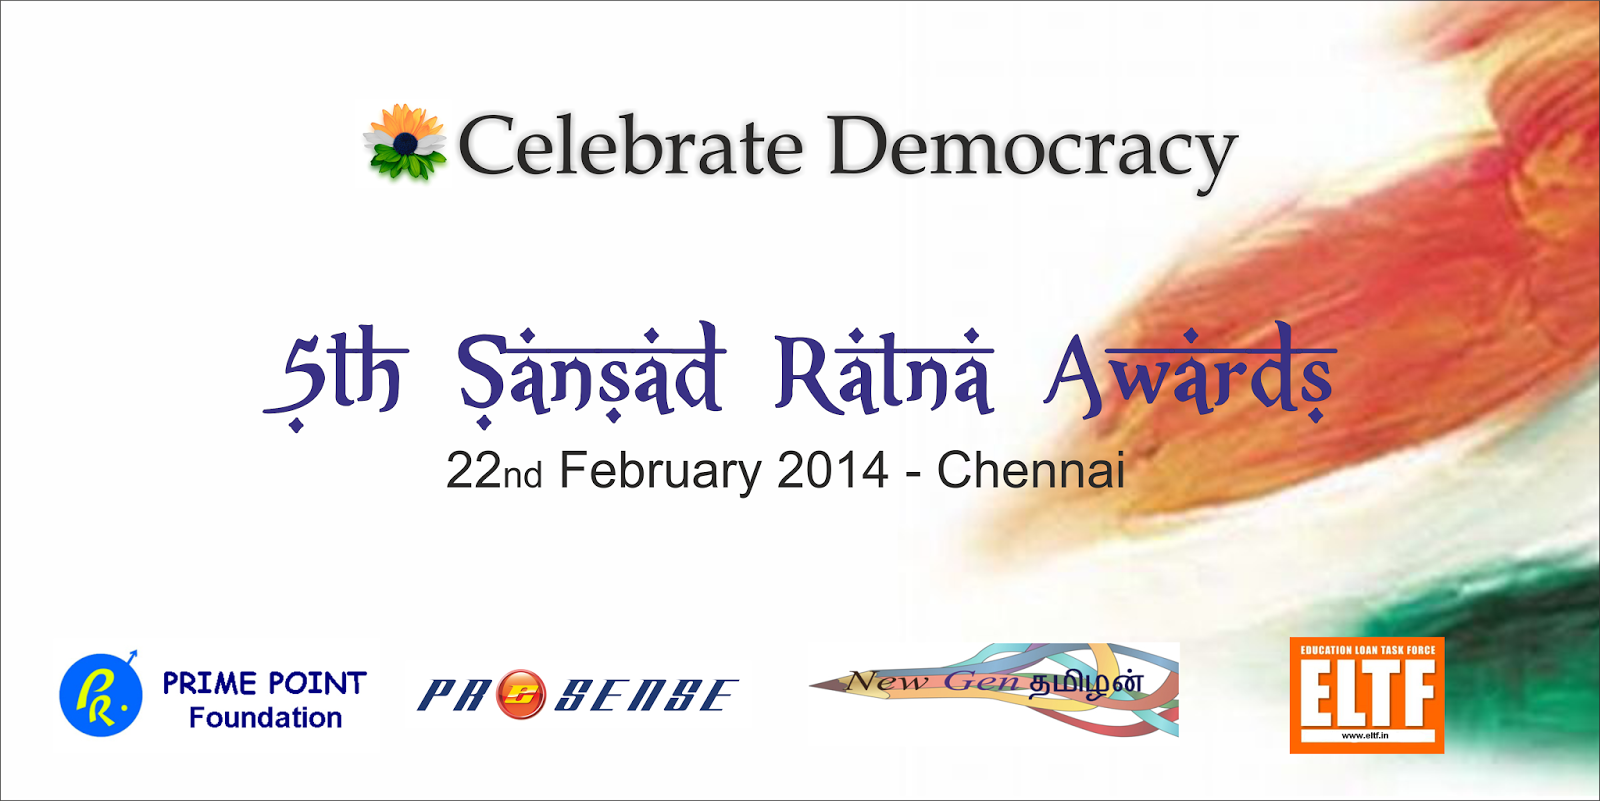 Celebrate Democracy - Sansad Ratna 2014 Awards